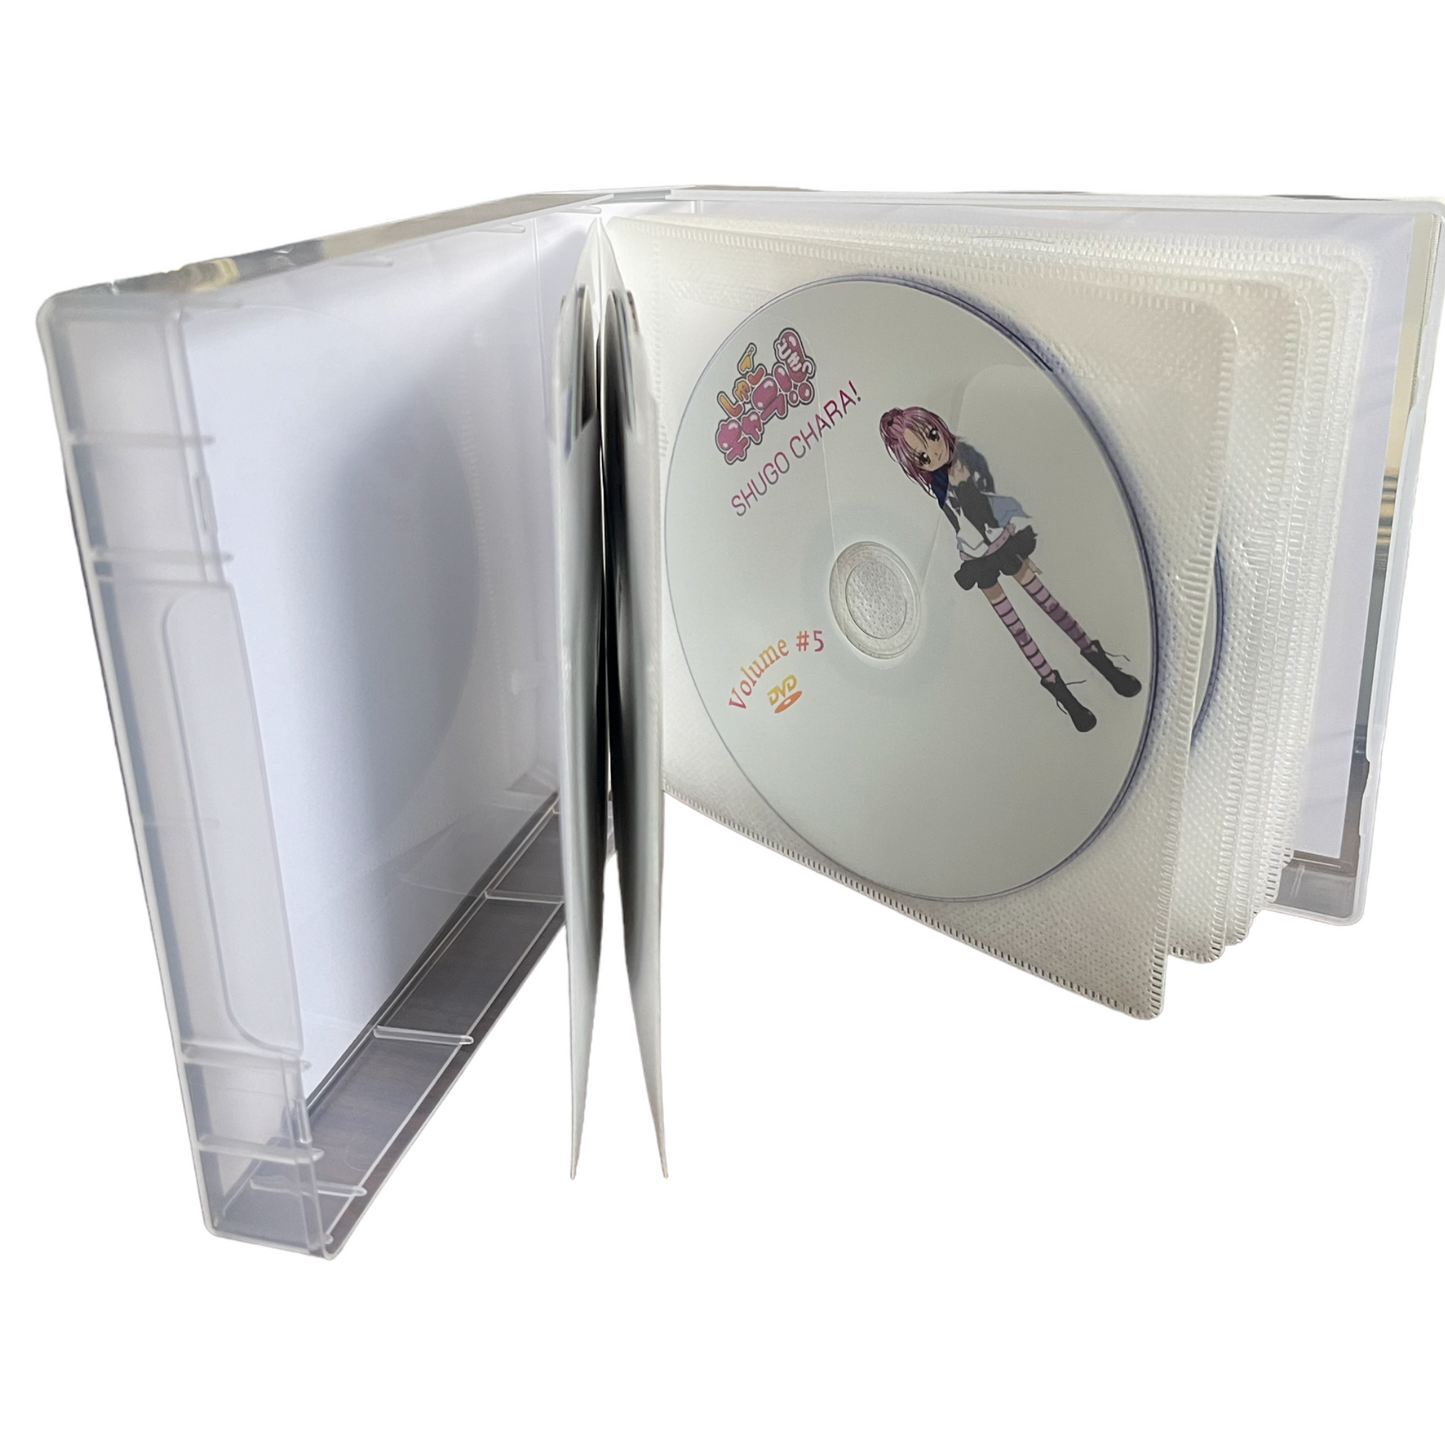 Shugo Chara Complete Series 1-127 DVD Boxset - RetroToonsMedia Store